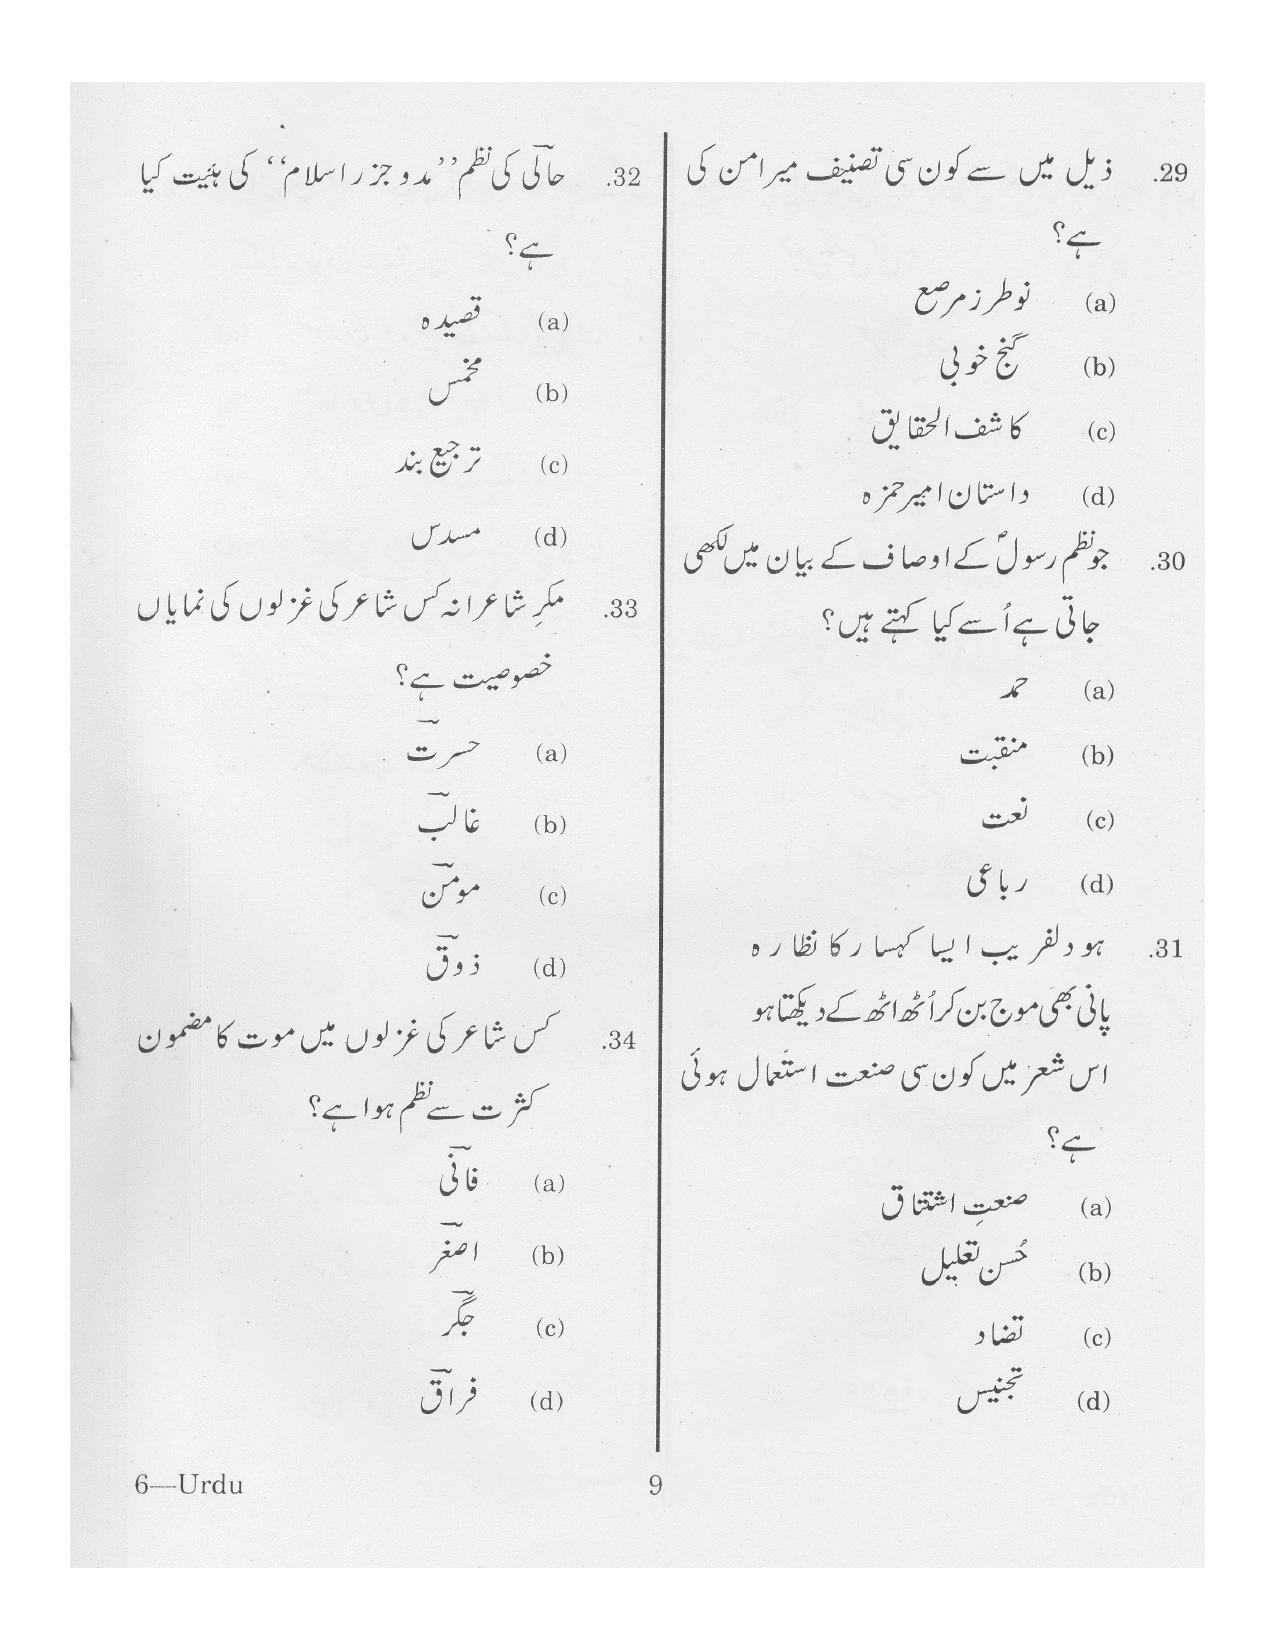 URATPG Urdu 2013 Question Paper - Page 8